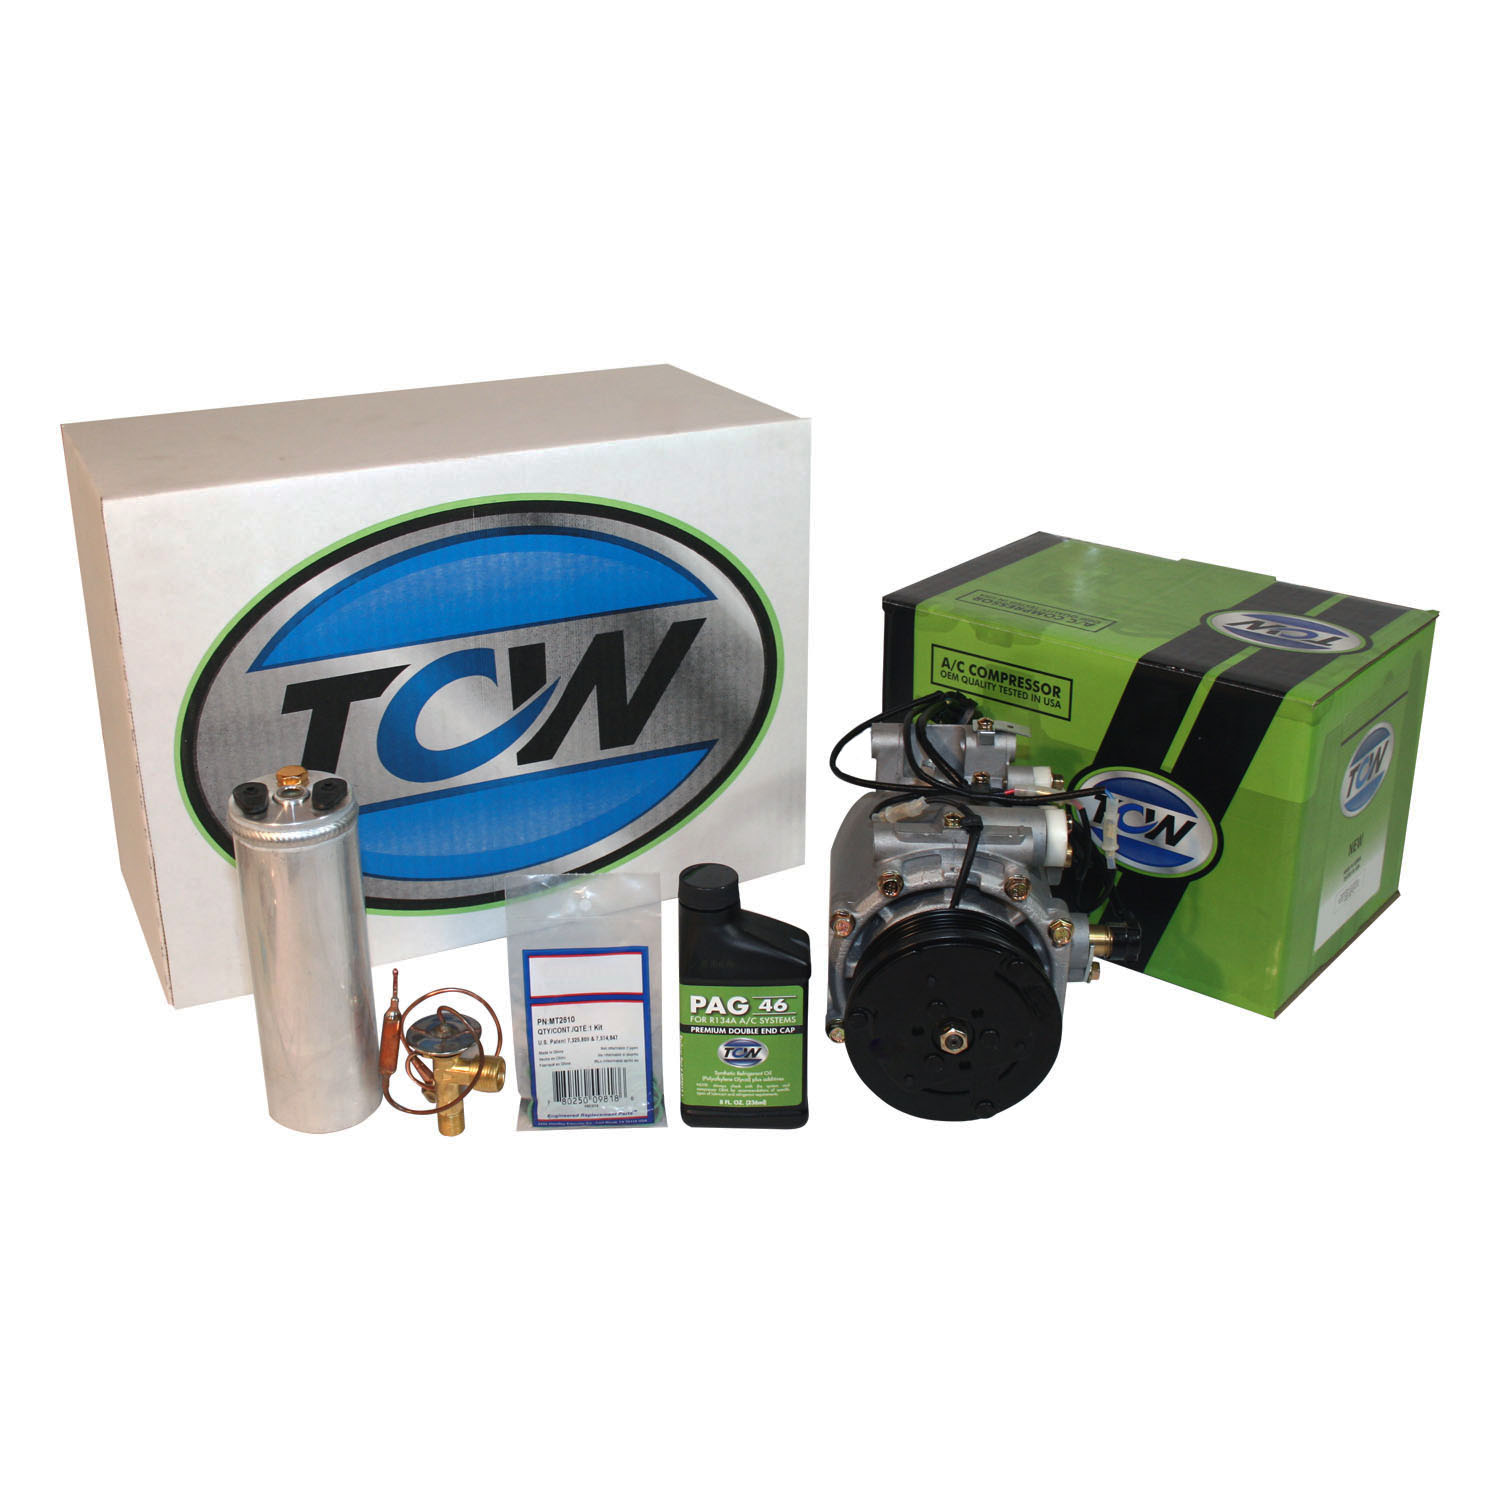 TCW Vehicle A/C Kit K1000215N New Product Image field_60b6a13a6e67c